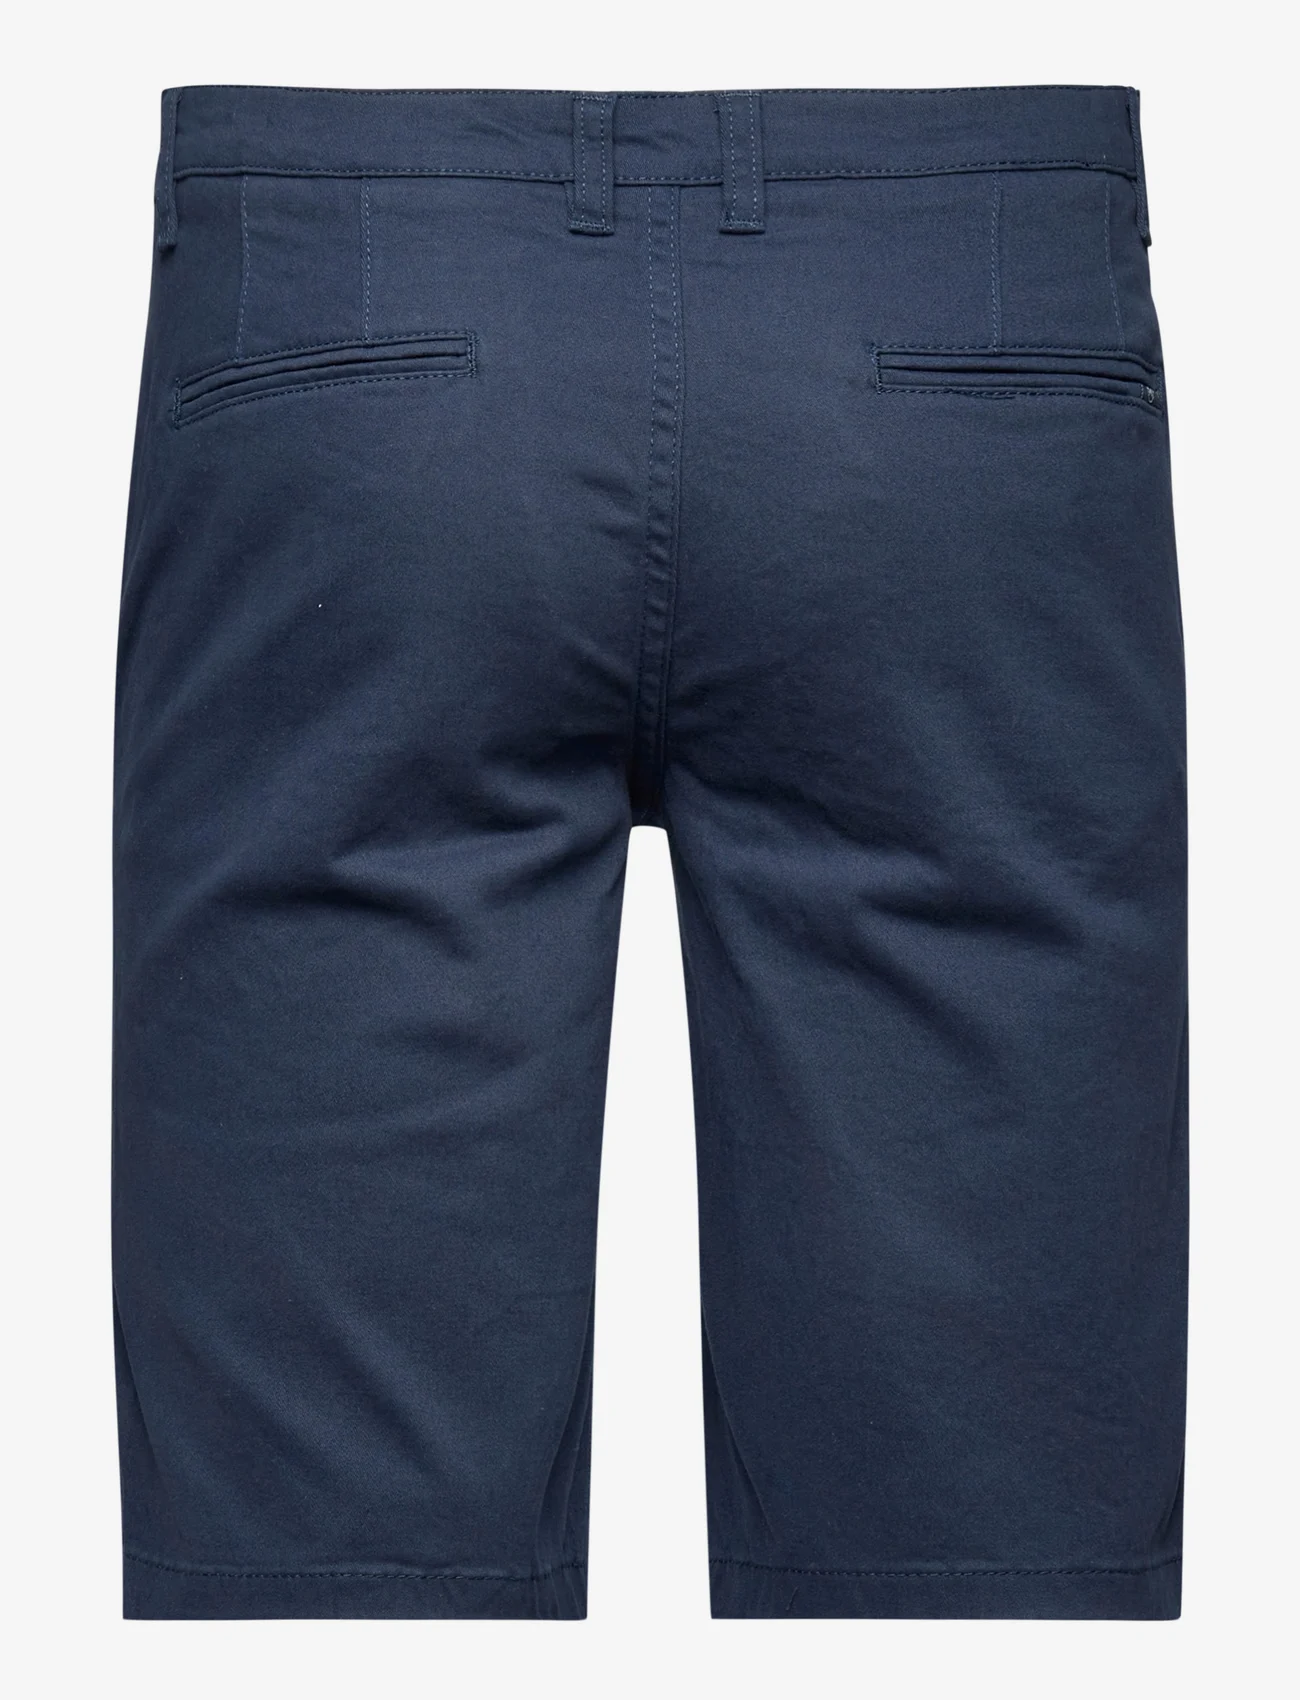 Kronstadt - Jonas Twill shorts - „chino“ stiliaus šortai - navy - 1